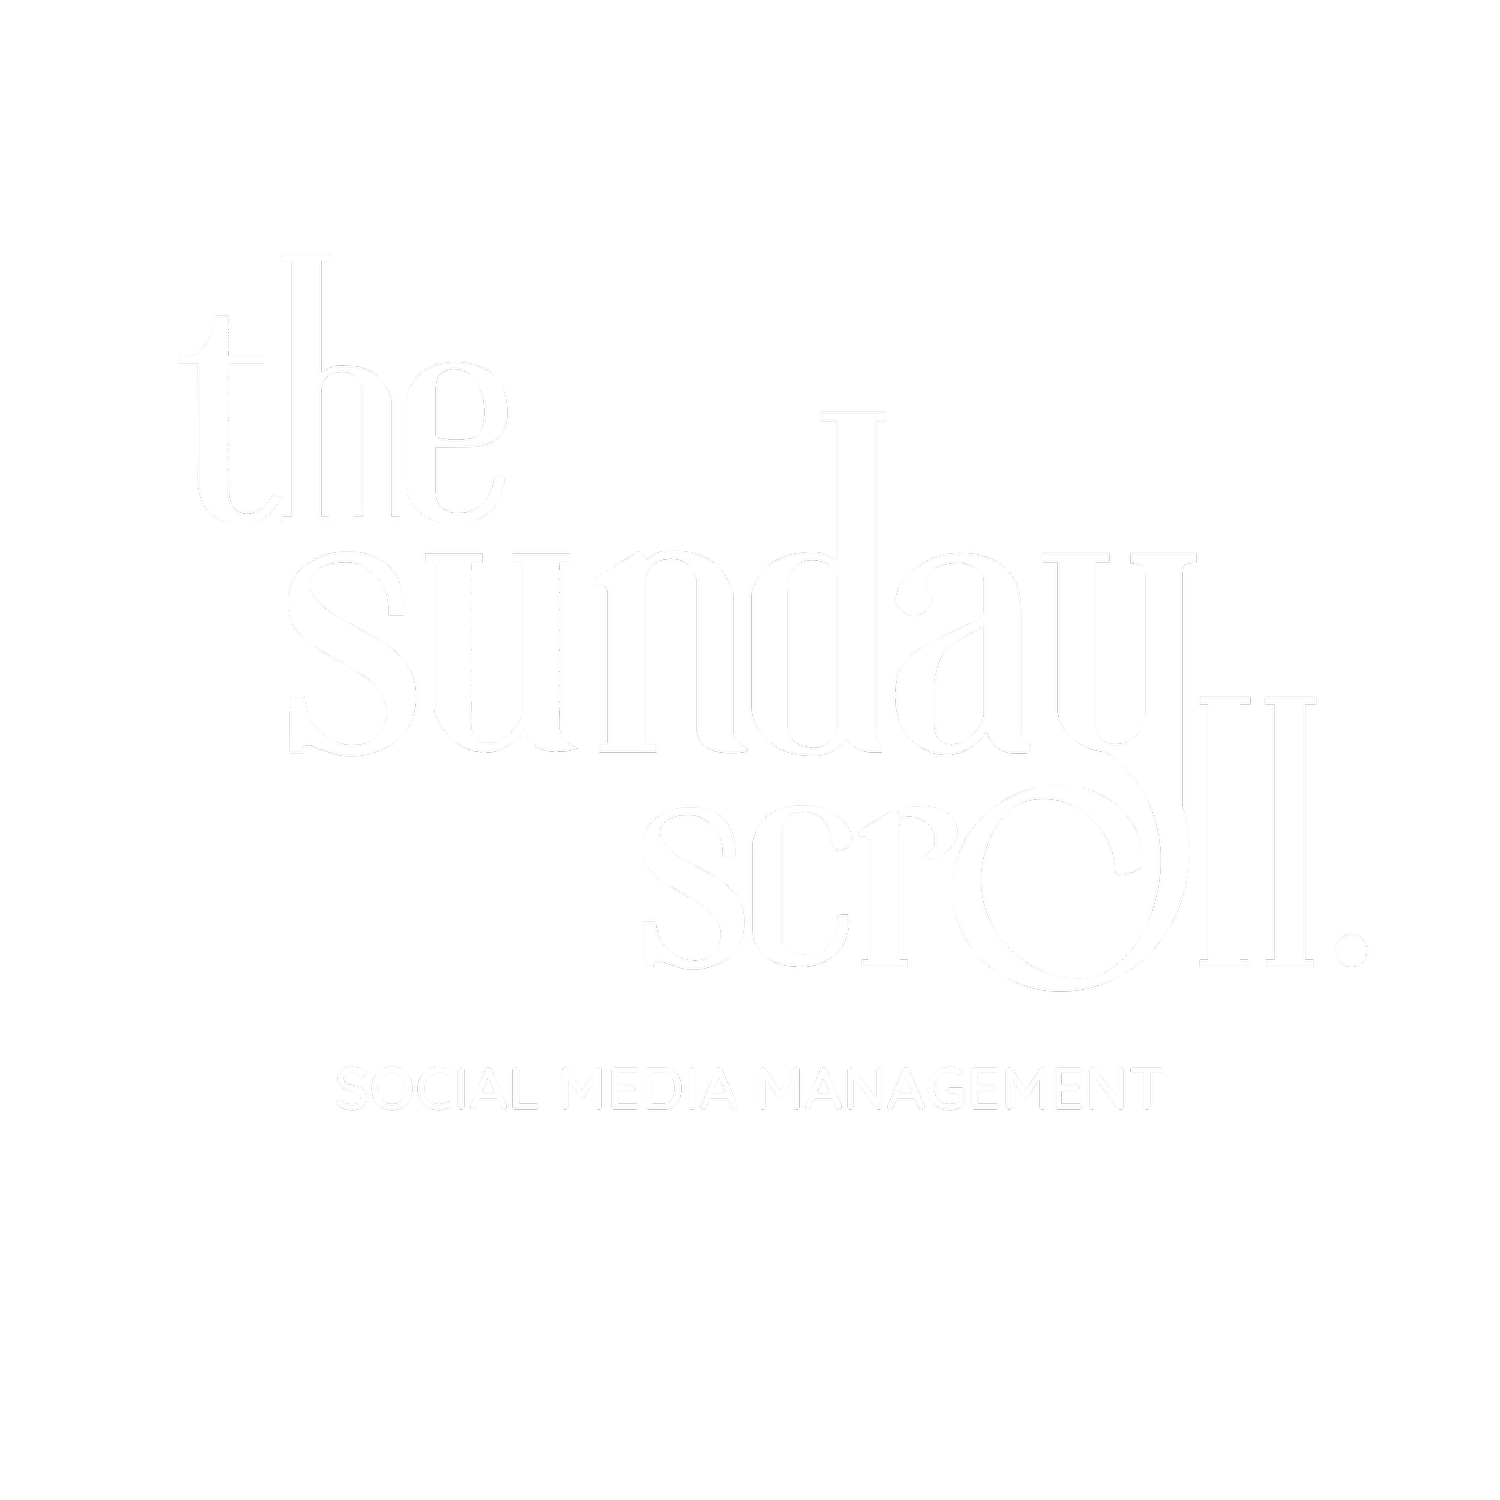 The Sunday Scroll